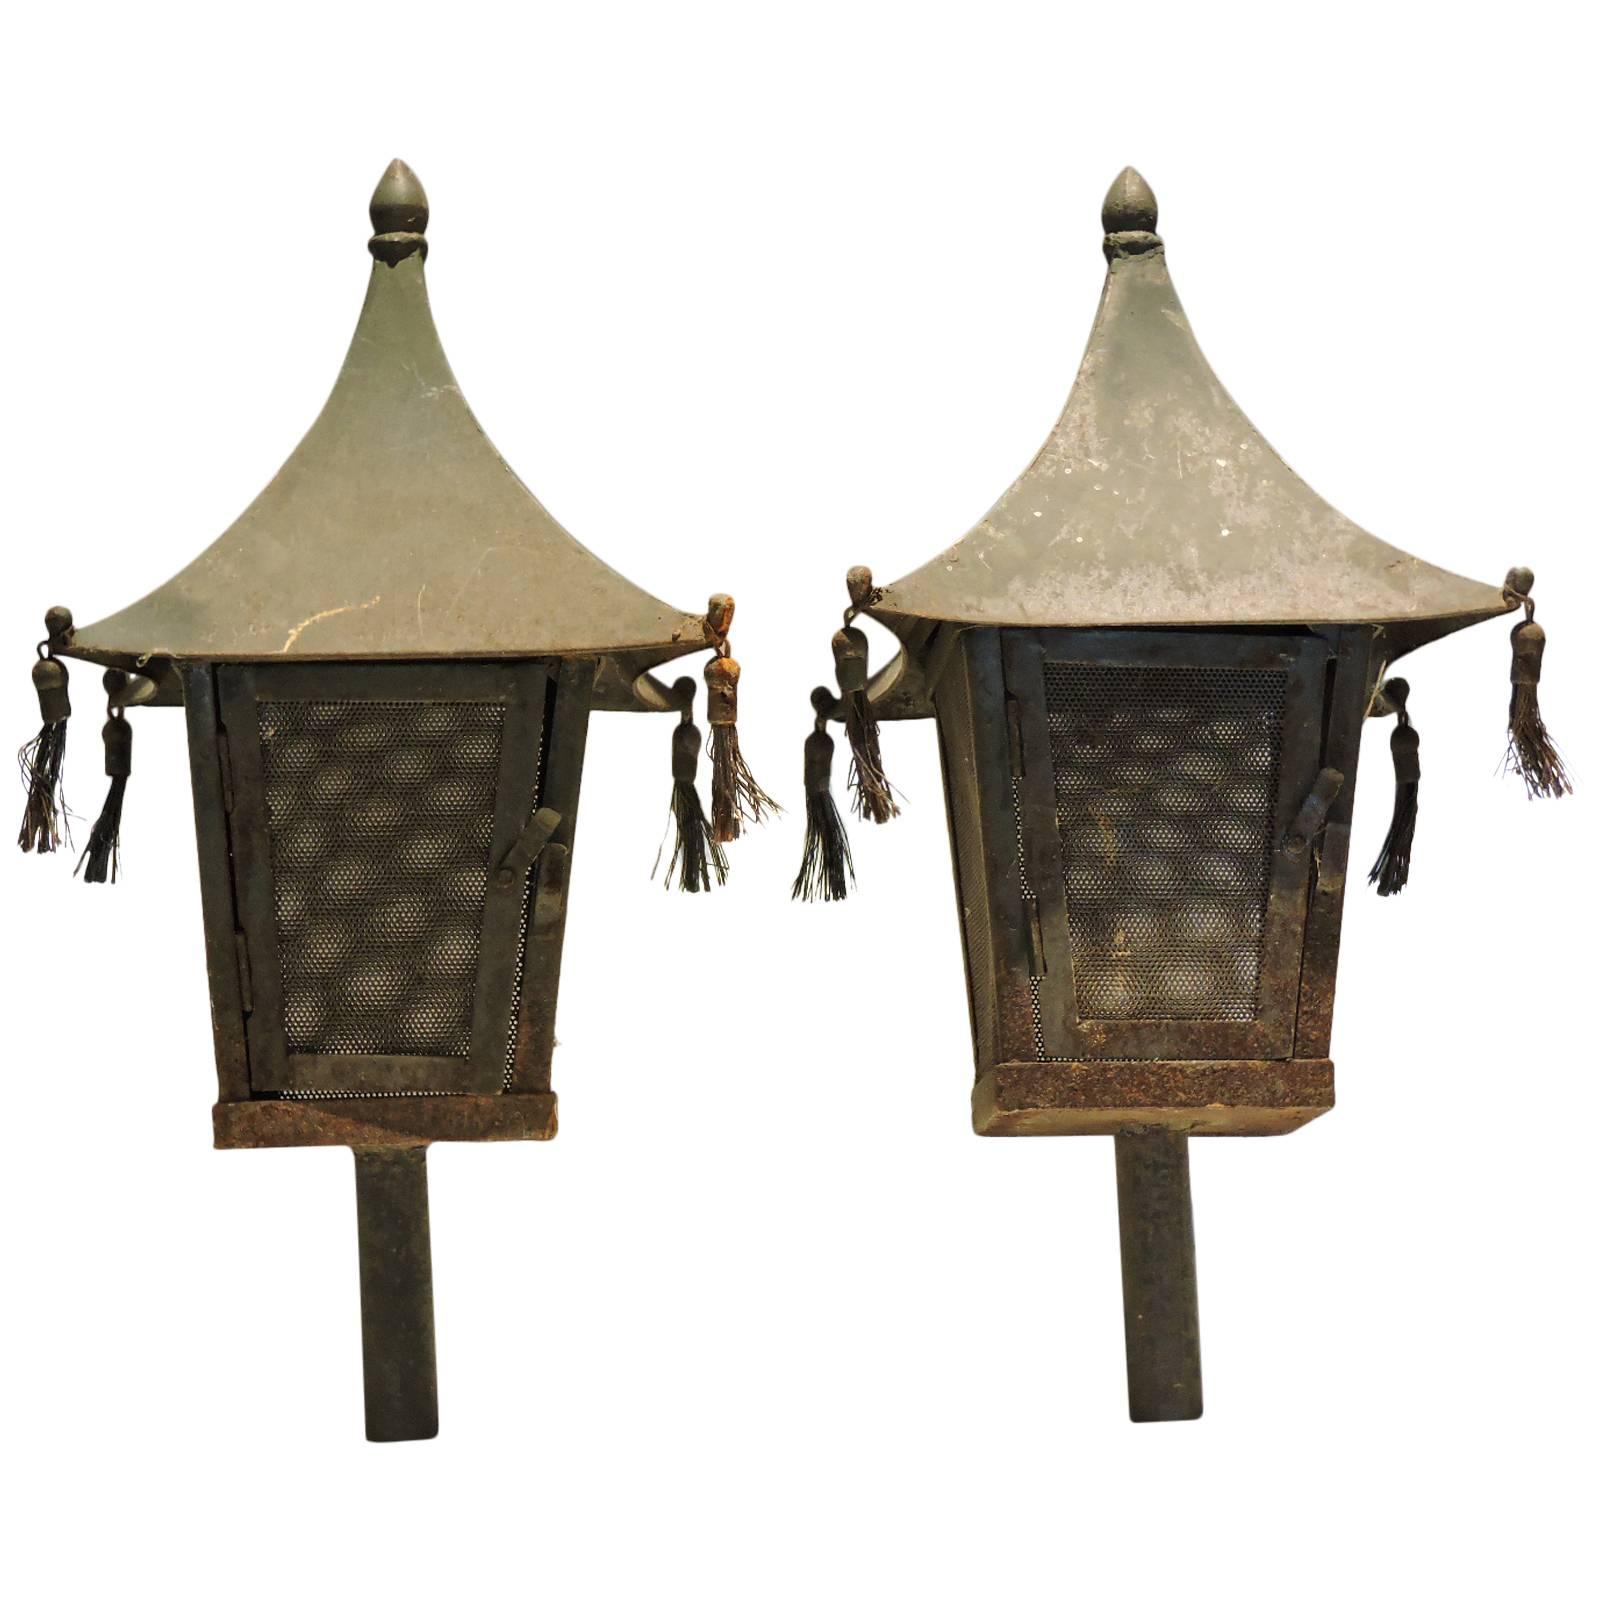 Pair of Tasseled Pagoda Form Candle Lanterns